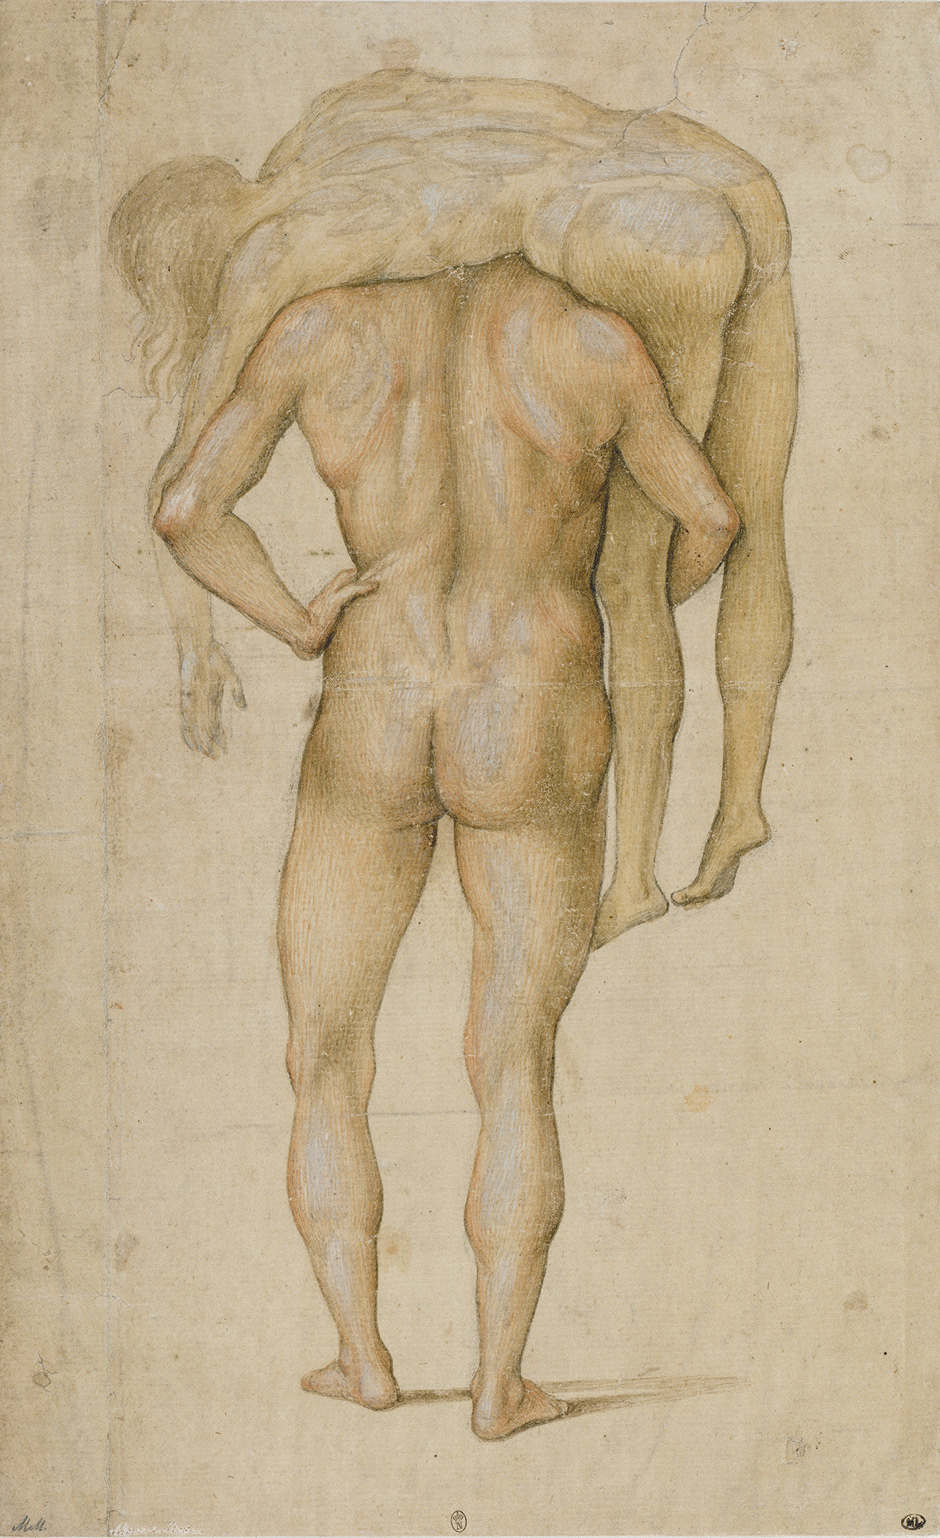 Luca Signorelli, "Man Carrying Corpse," ca. 1500.